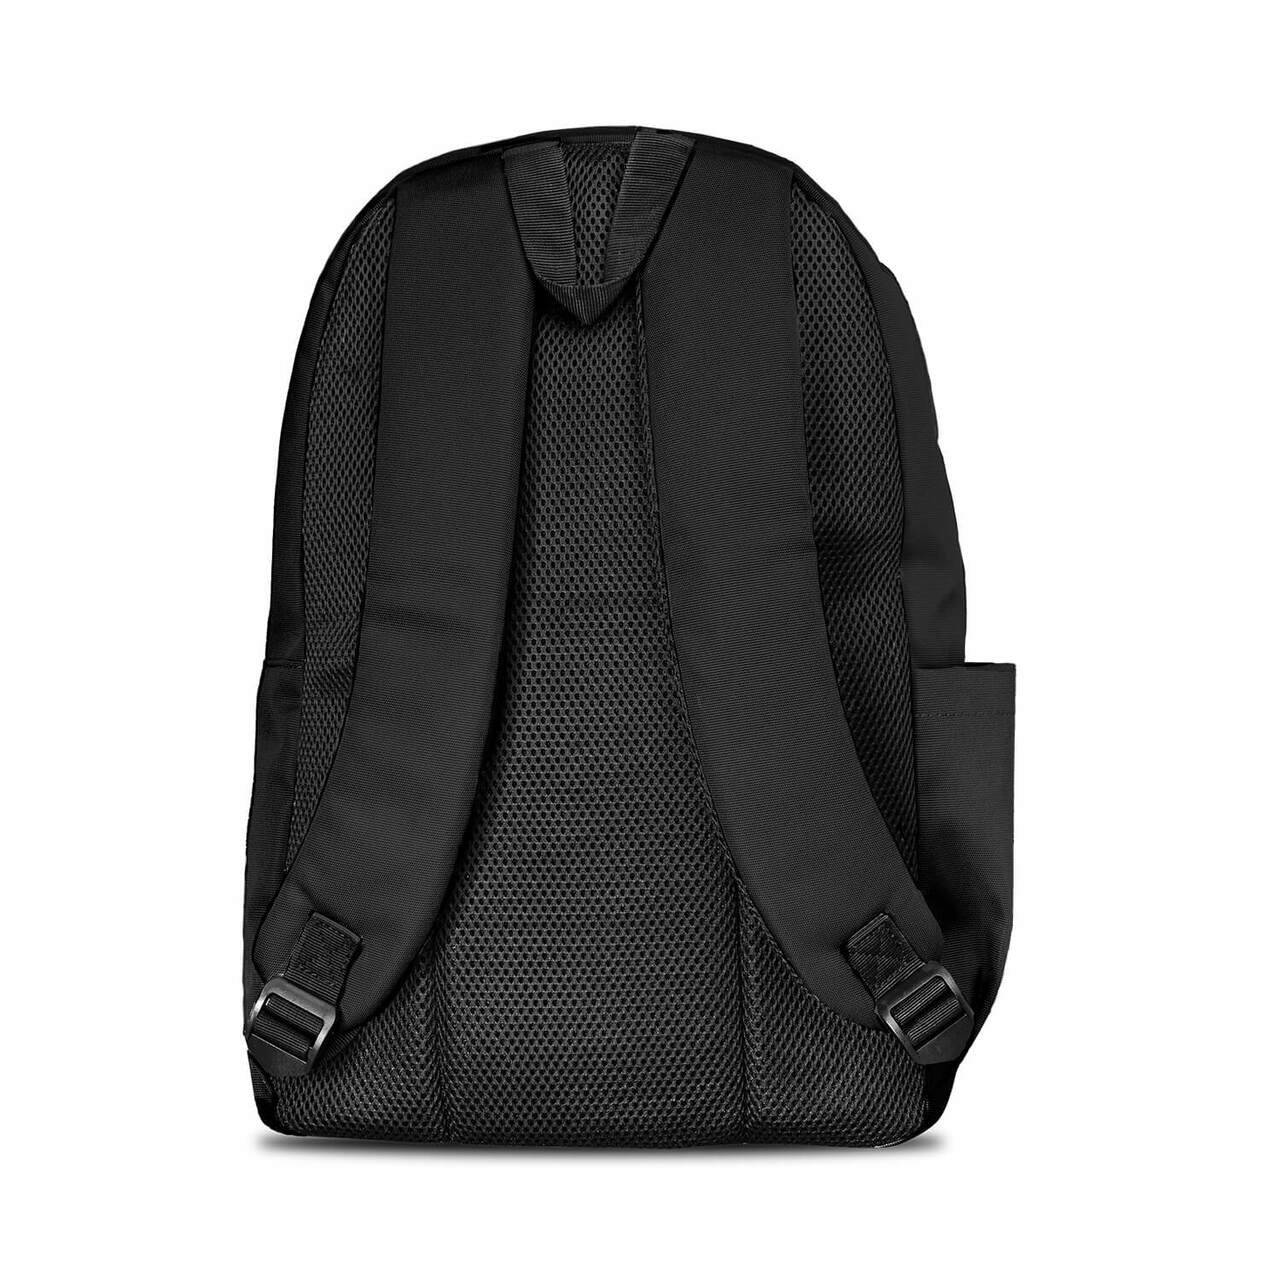 Kansas City Chiefs Campus Laptop Backpack -BLACK